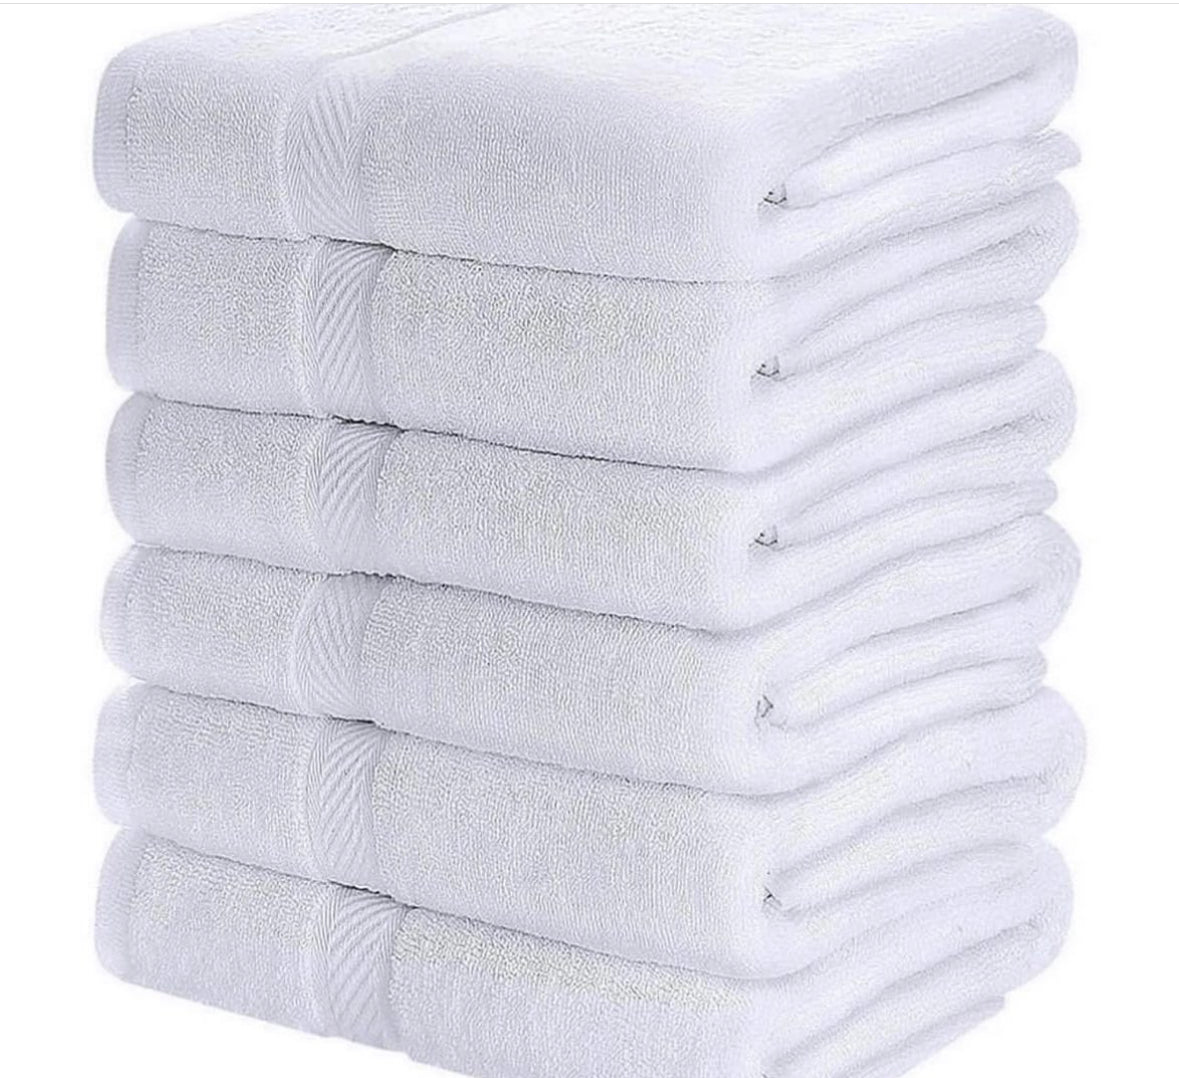 Salon Towel Package